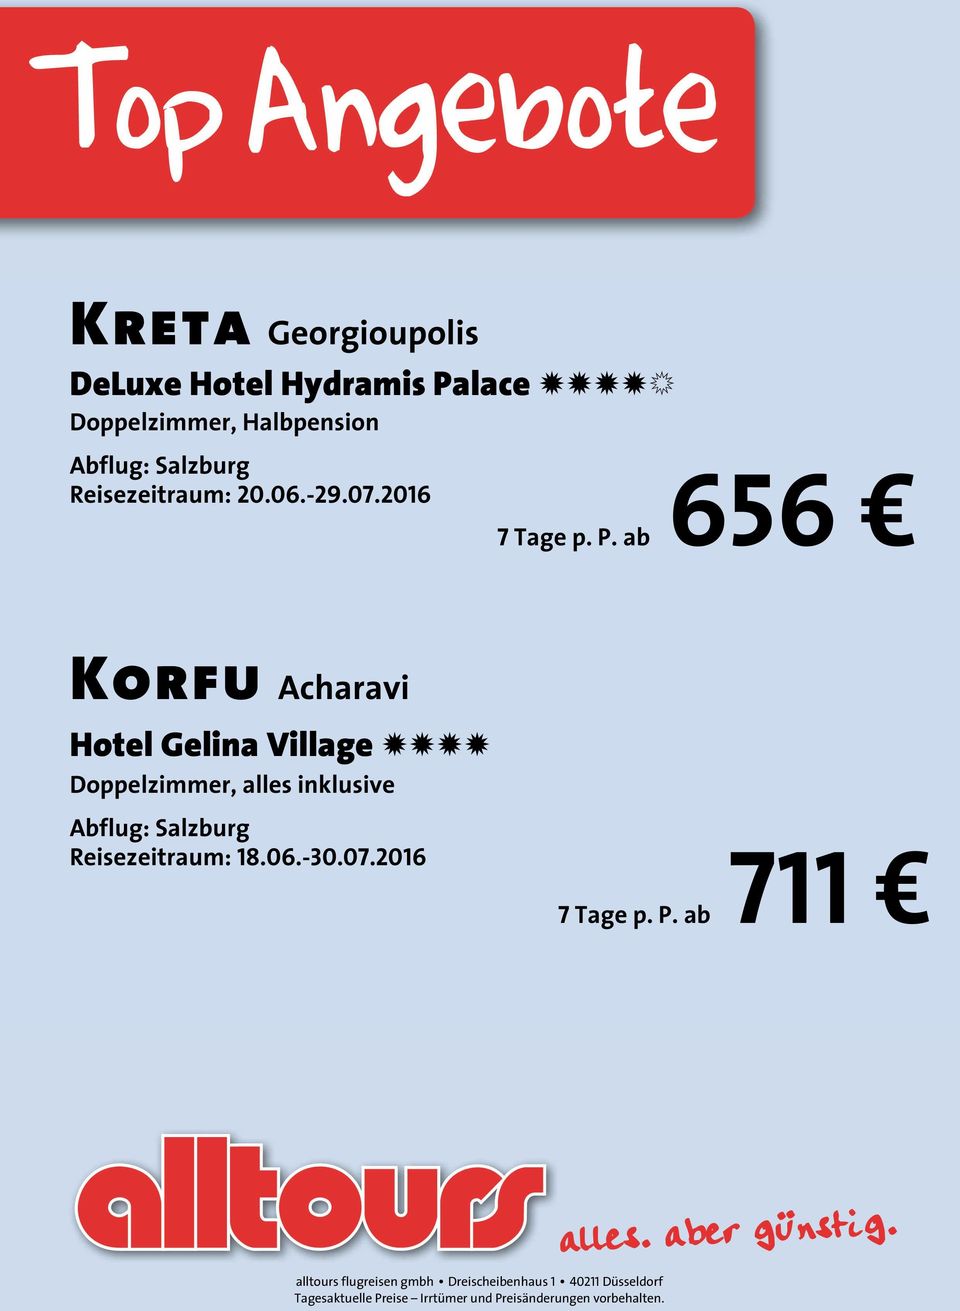 P. ab 656 Korfu Acharavi Hotel Gelina Village NNNN Abflug: